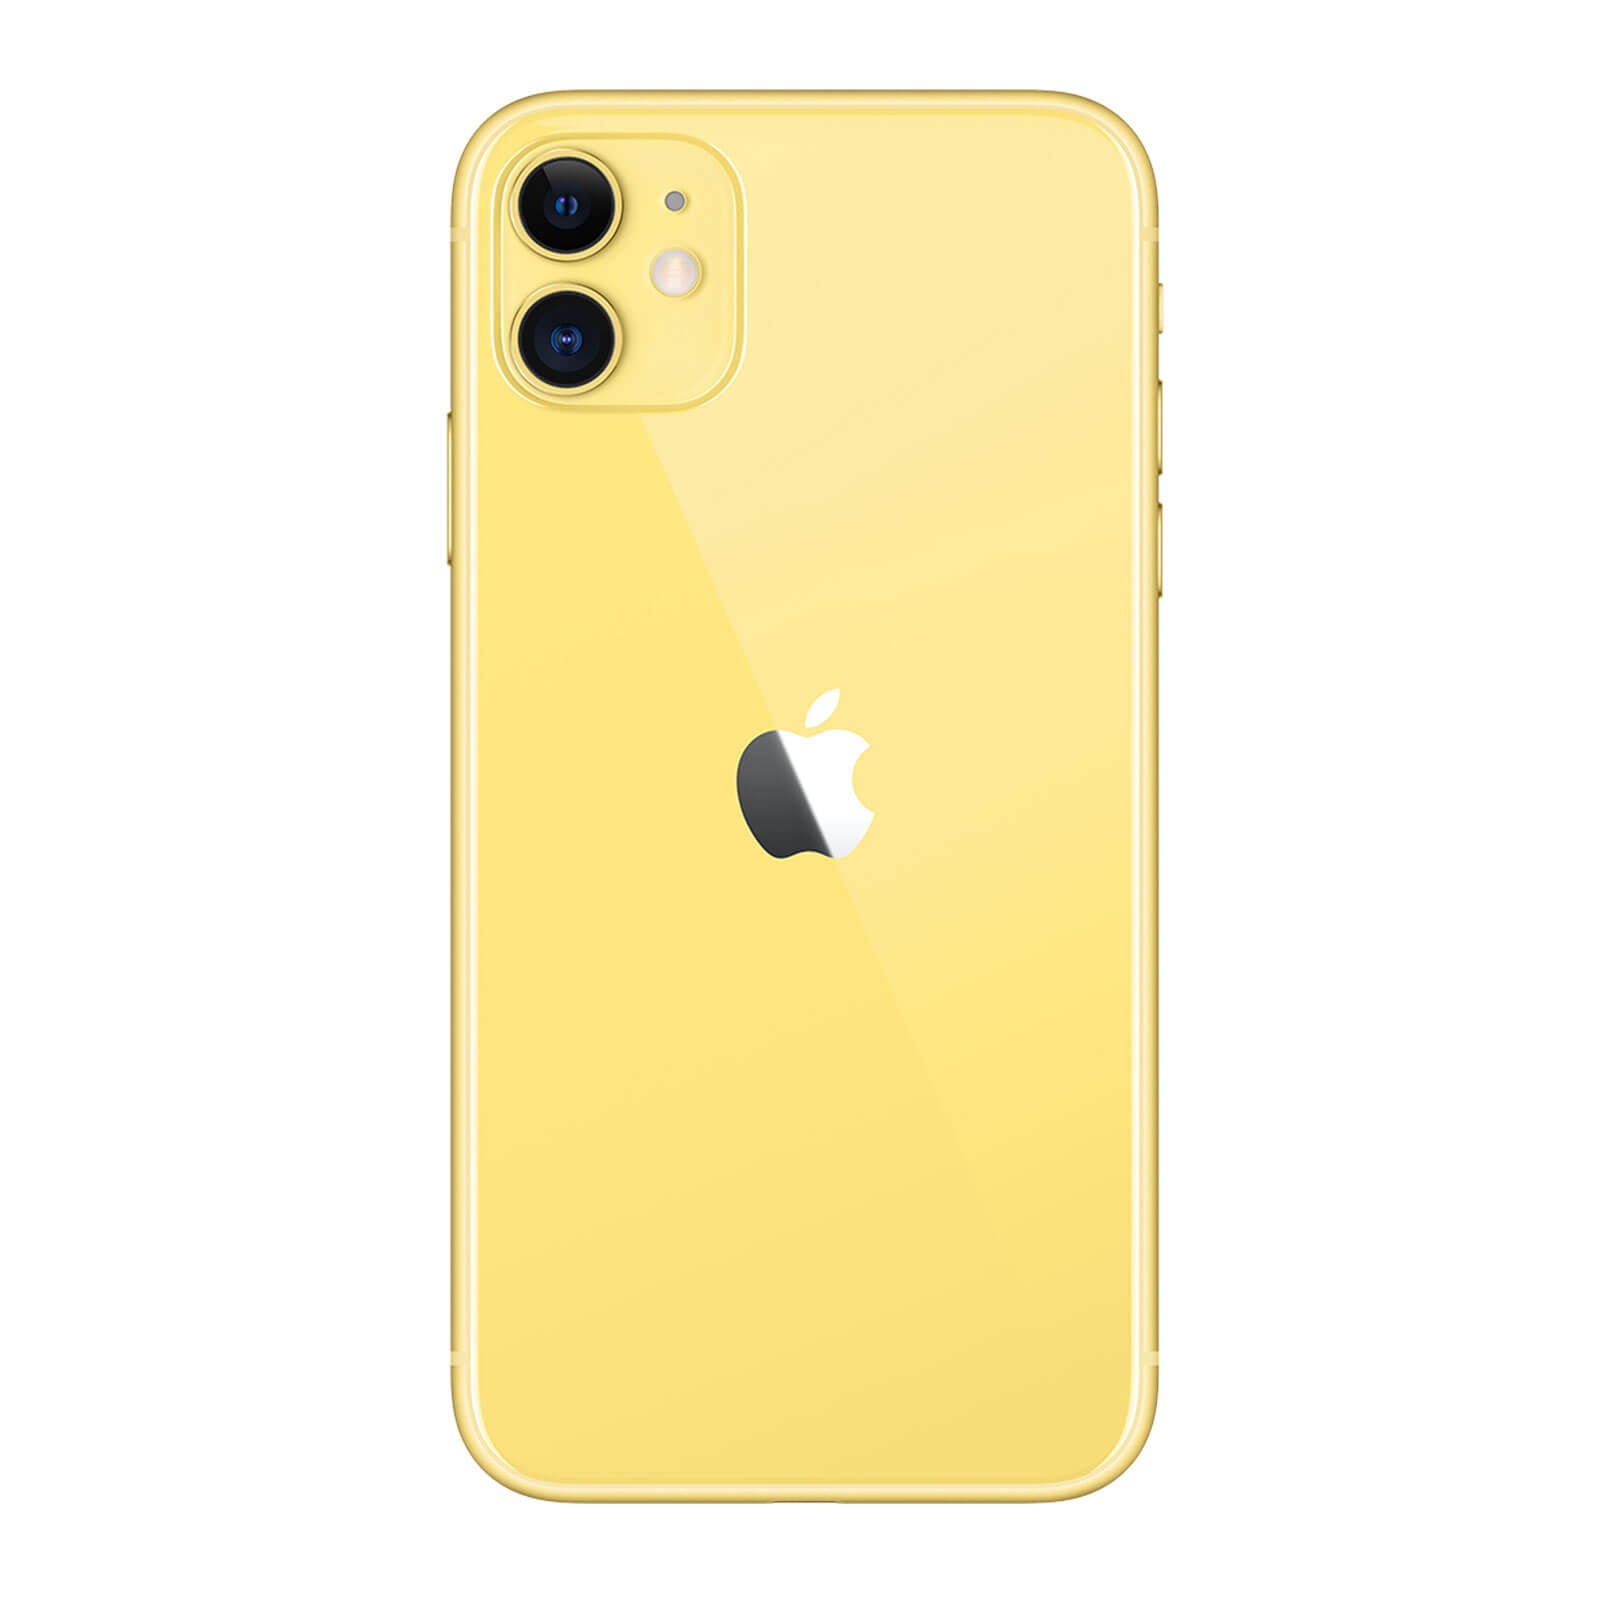 Apple iPhone 11 64GB Yellow Pristine - AT&T